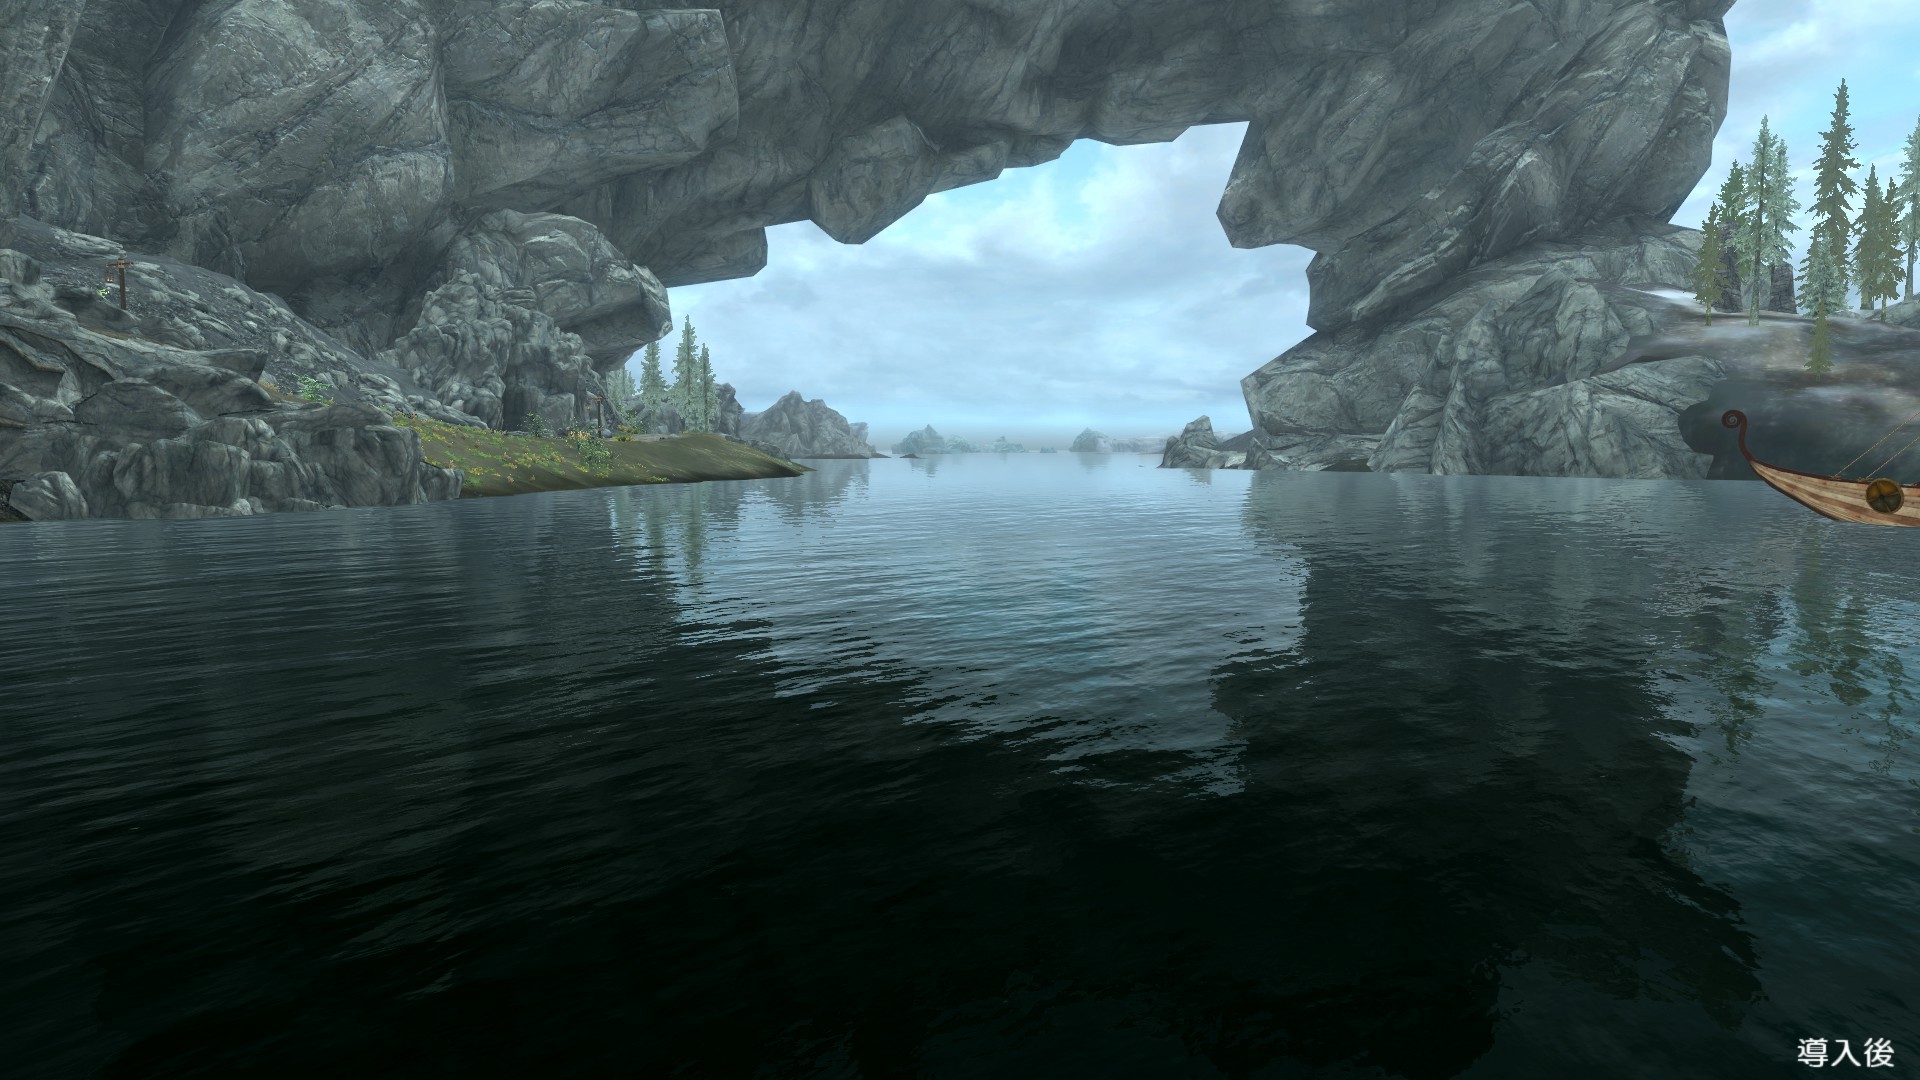 WATER - Water And Terrain Enhancement Reduxスクリーンショット